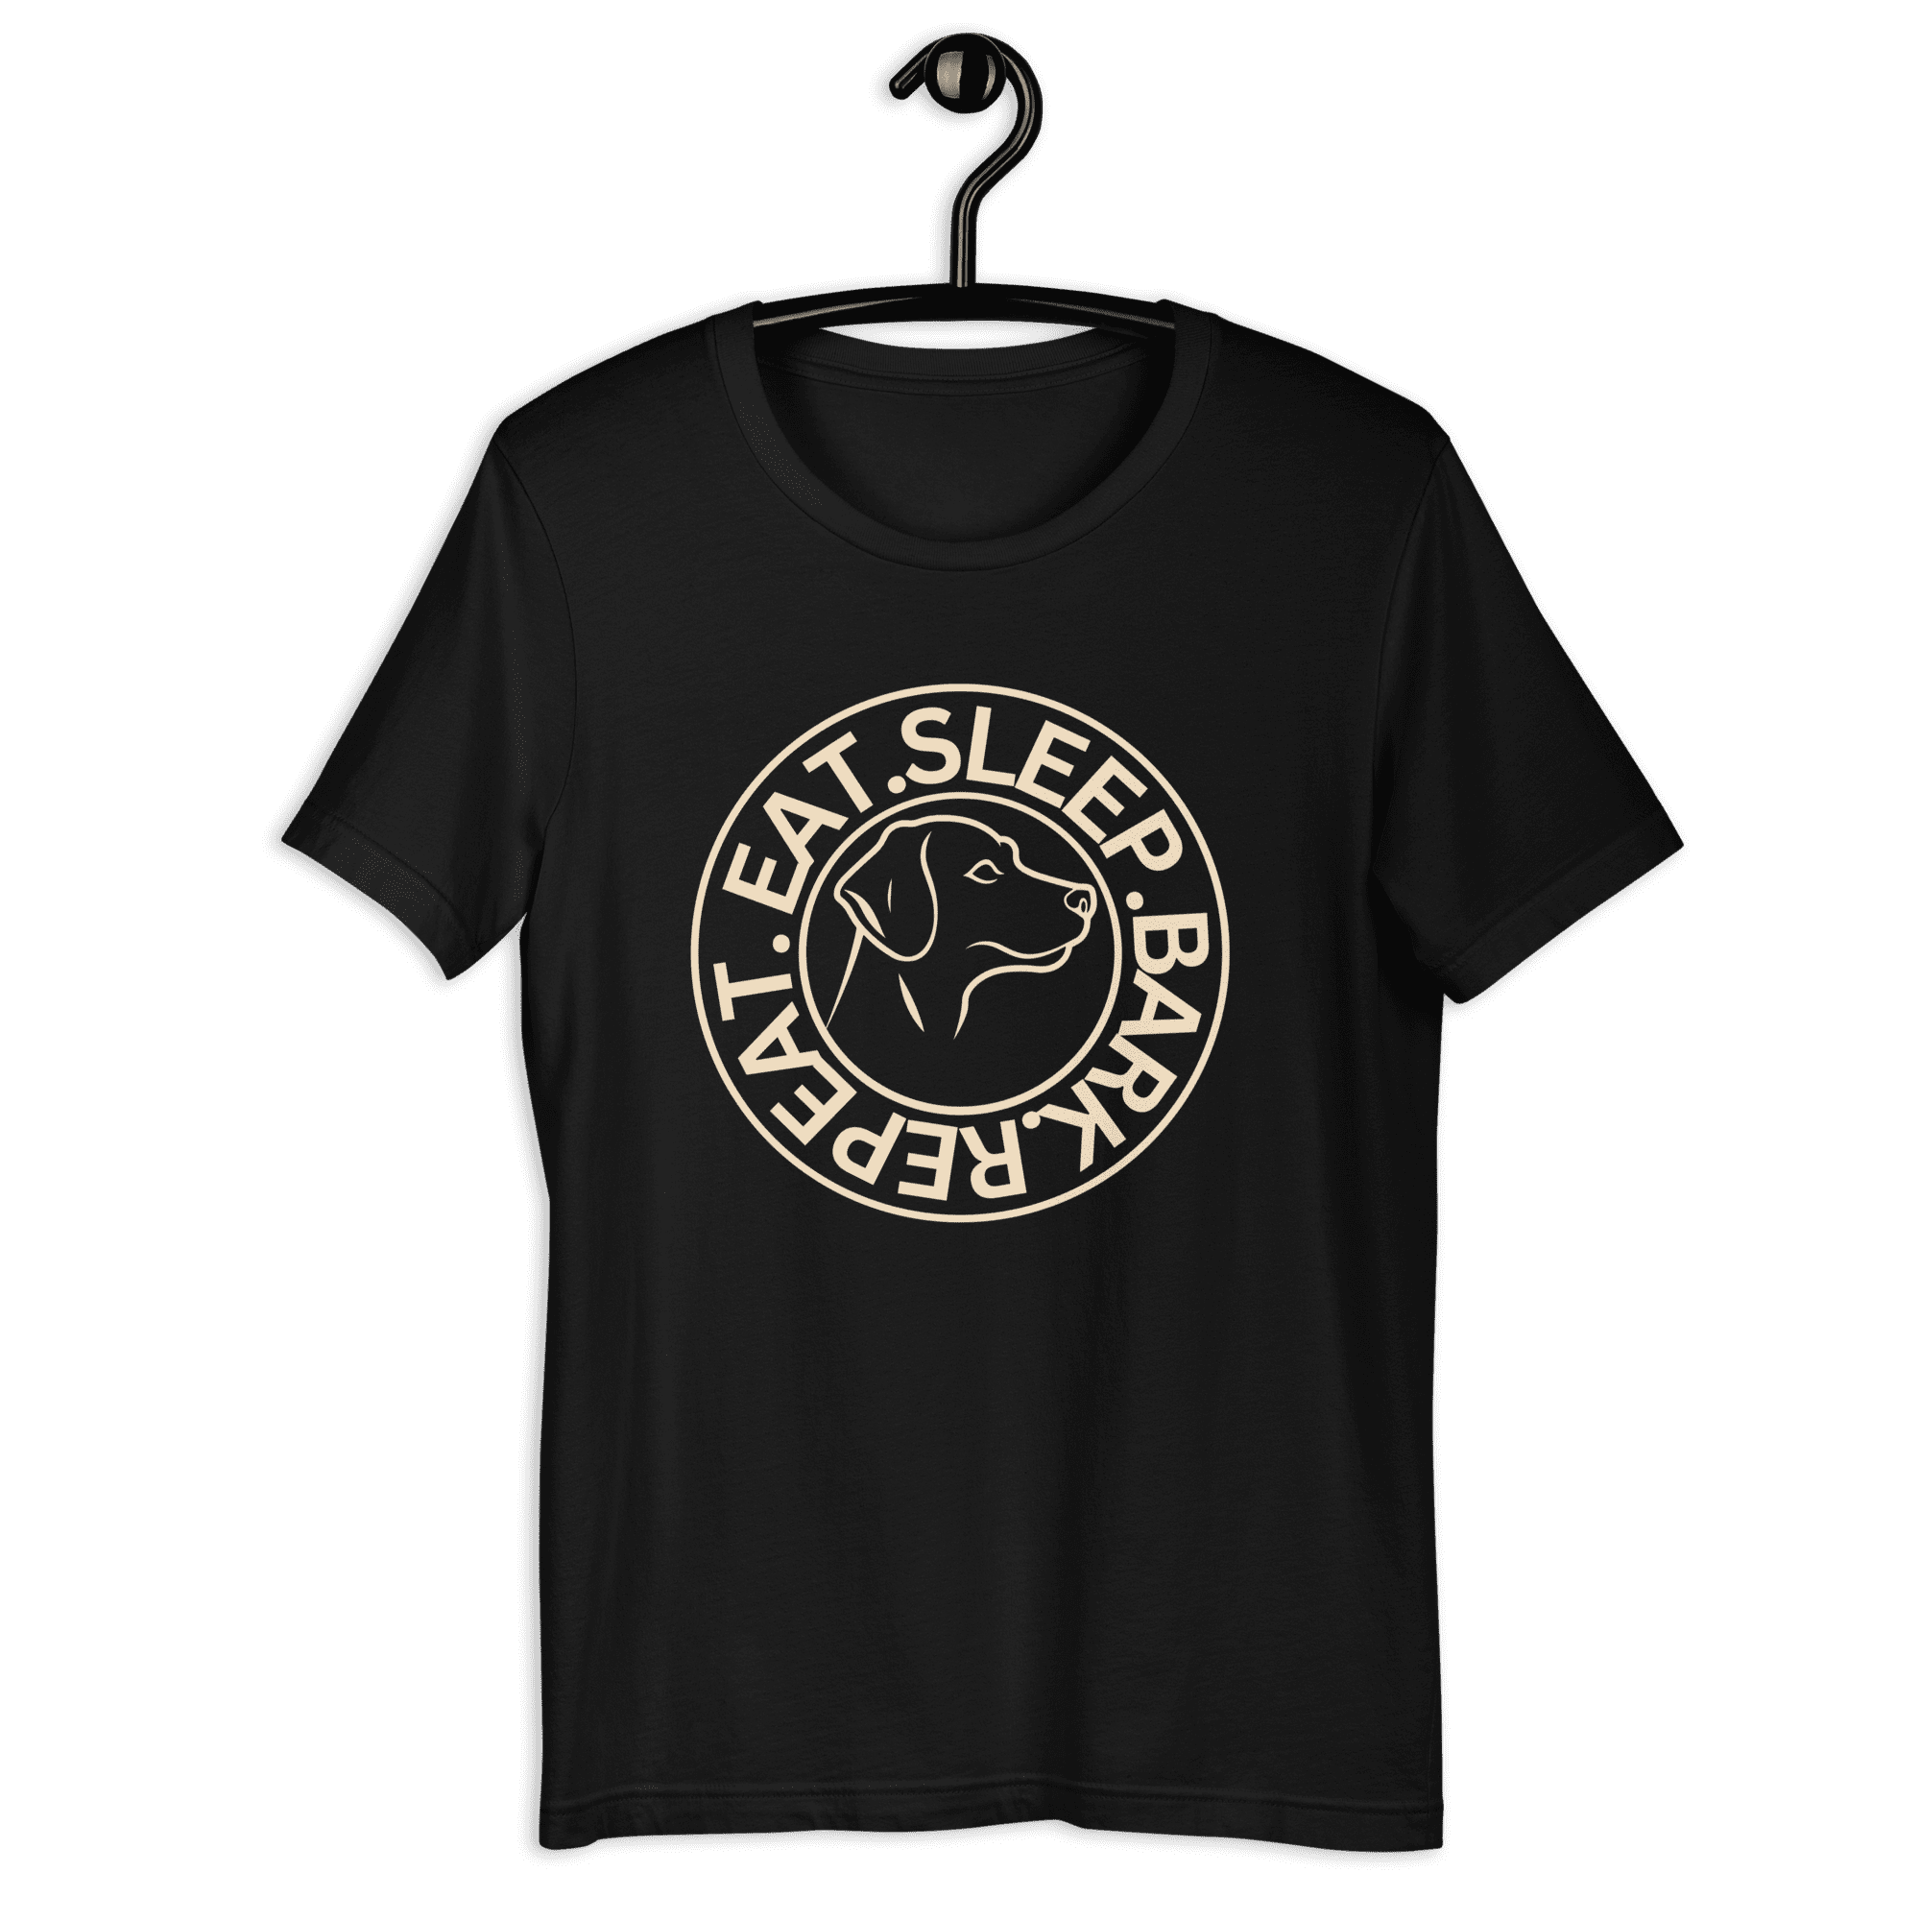 Eat Sleep Bark Repeat Labrador Retriever Unisex T-Shirt. Dark Black